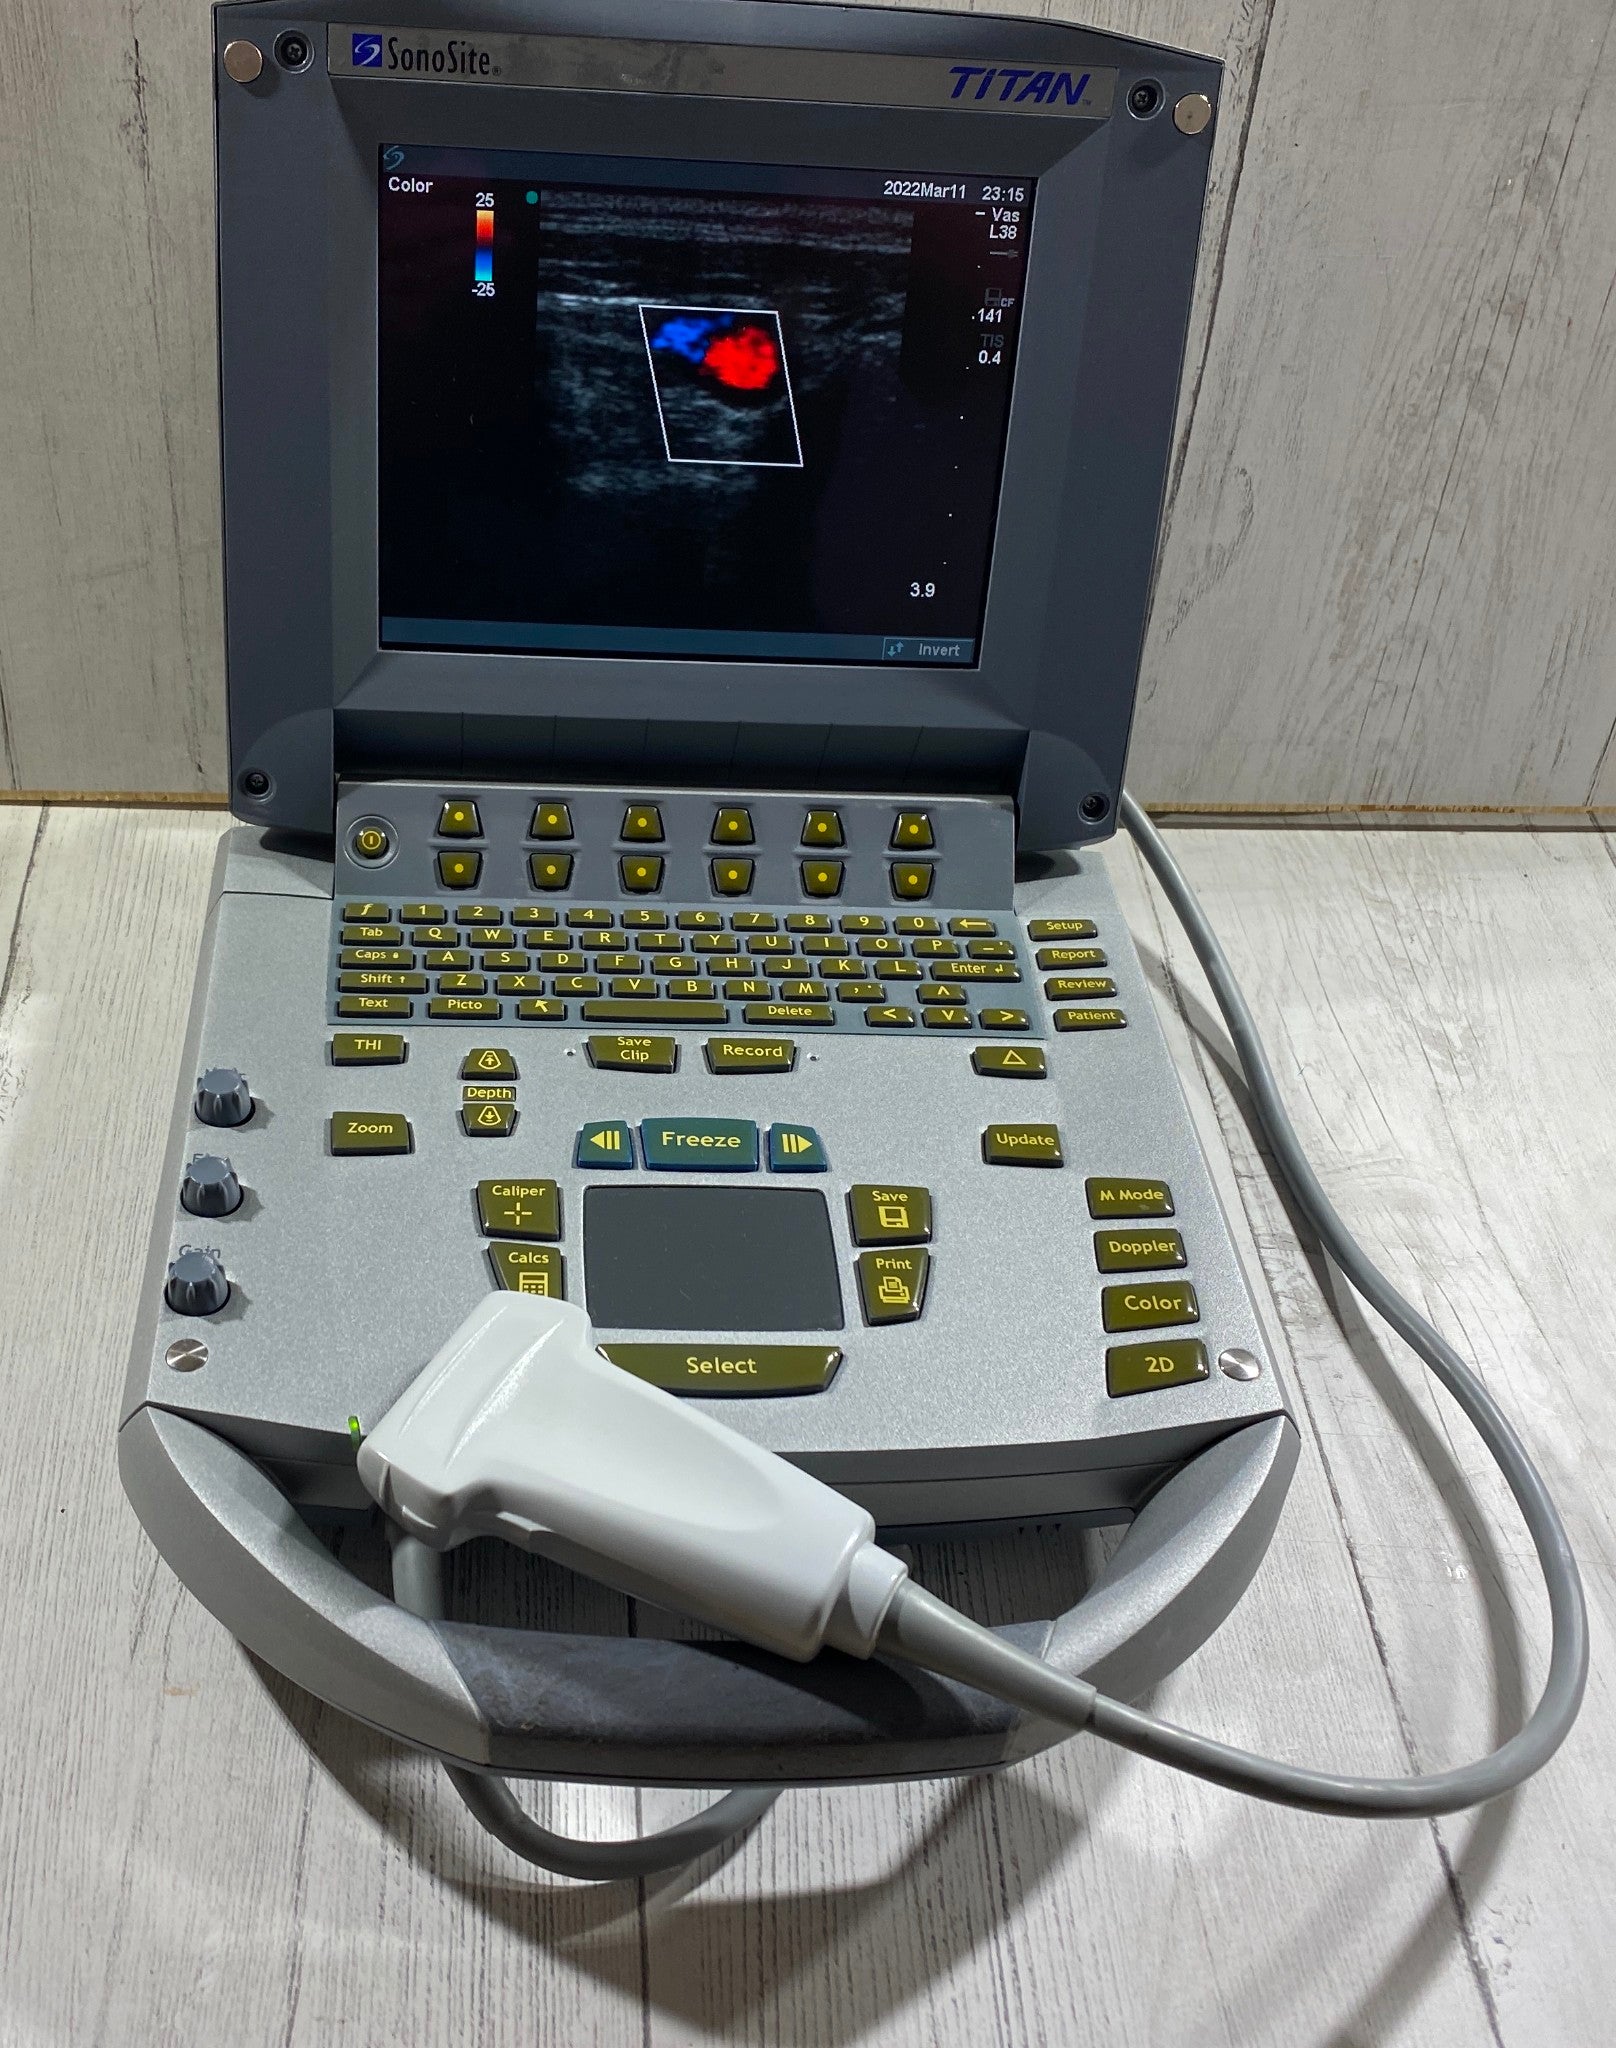 Sonosite Titan  Portable Ultrasound 2007 - With Linear Array probe L38/10-5 DIAGNOSTIC ULTRASOUND MACHINES FOR SALE